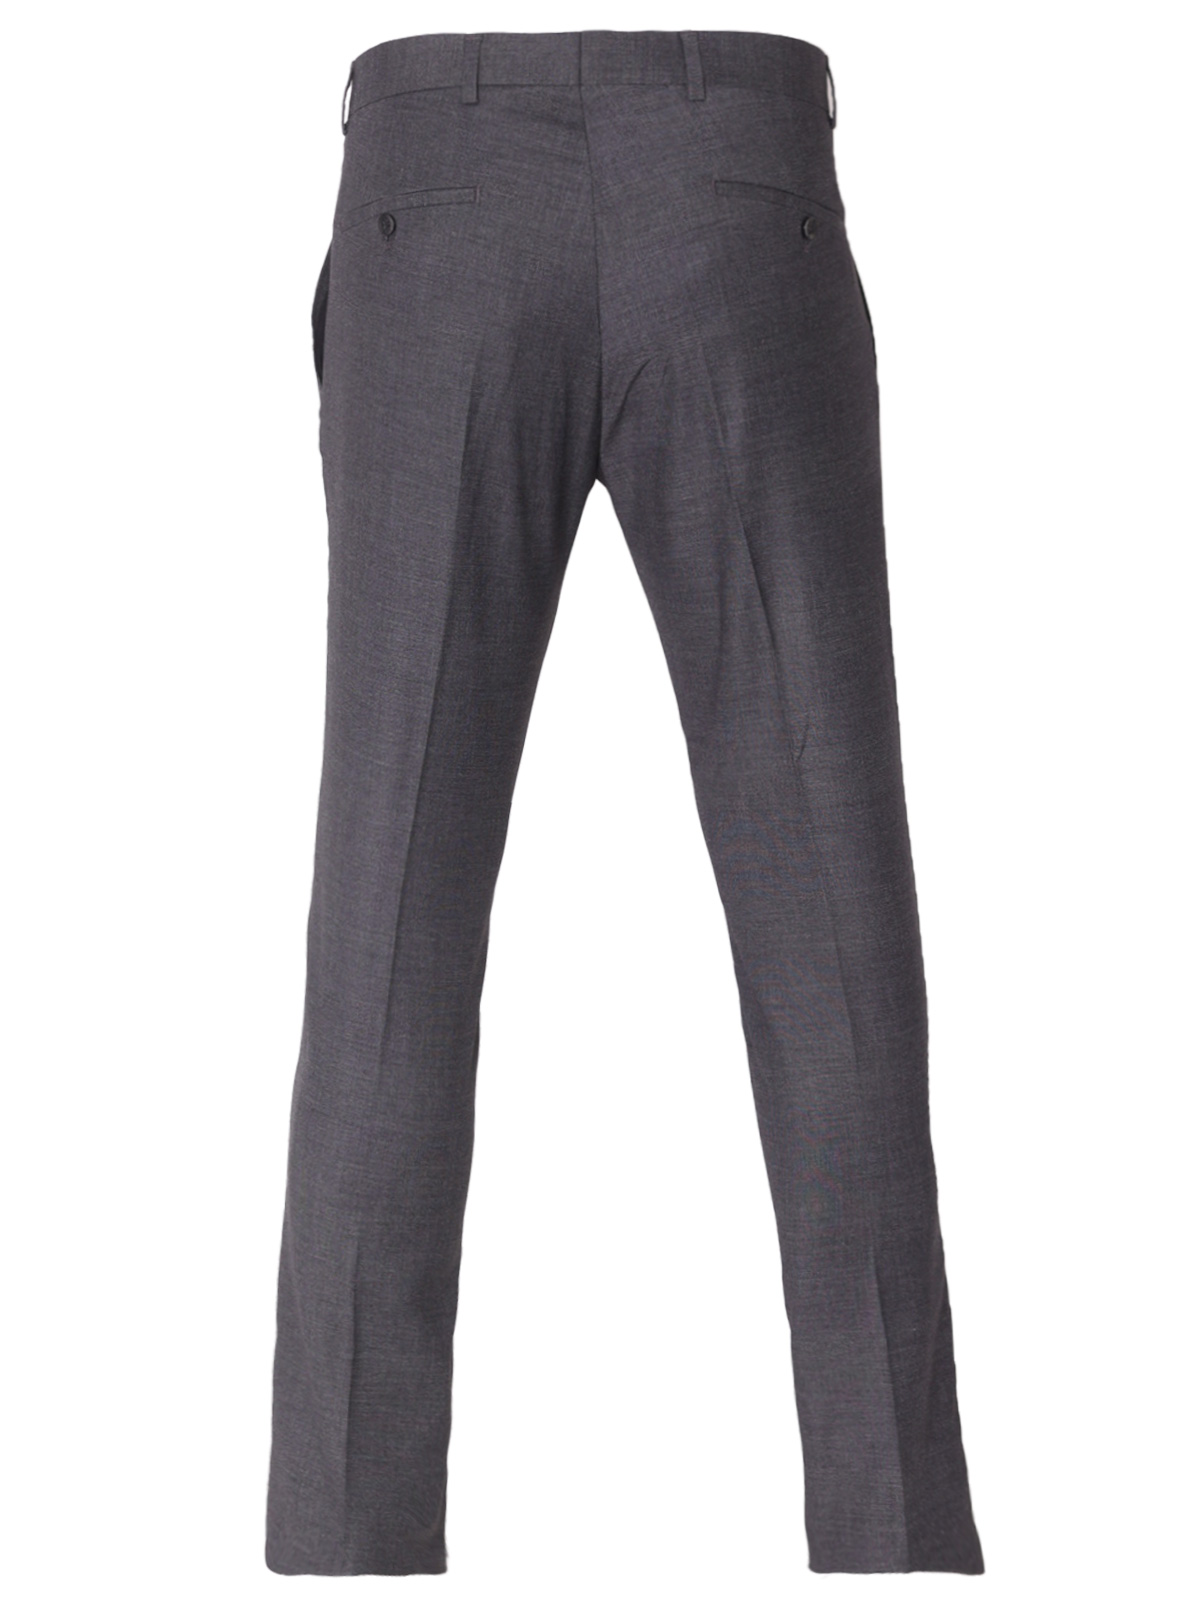 Pantaloni eleganti pentru barbati in gri - 63342 € 62.99 img2